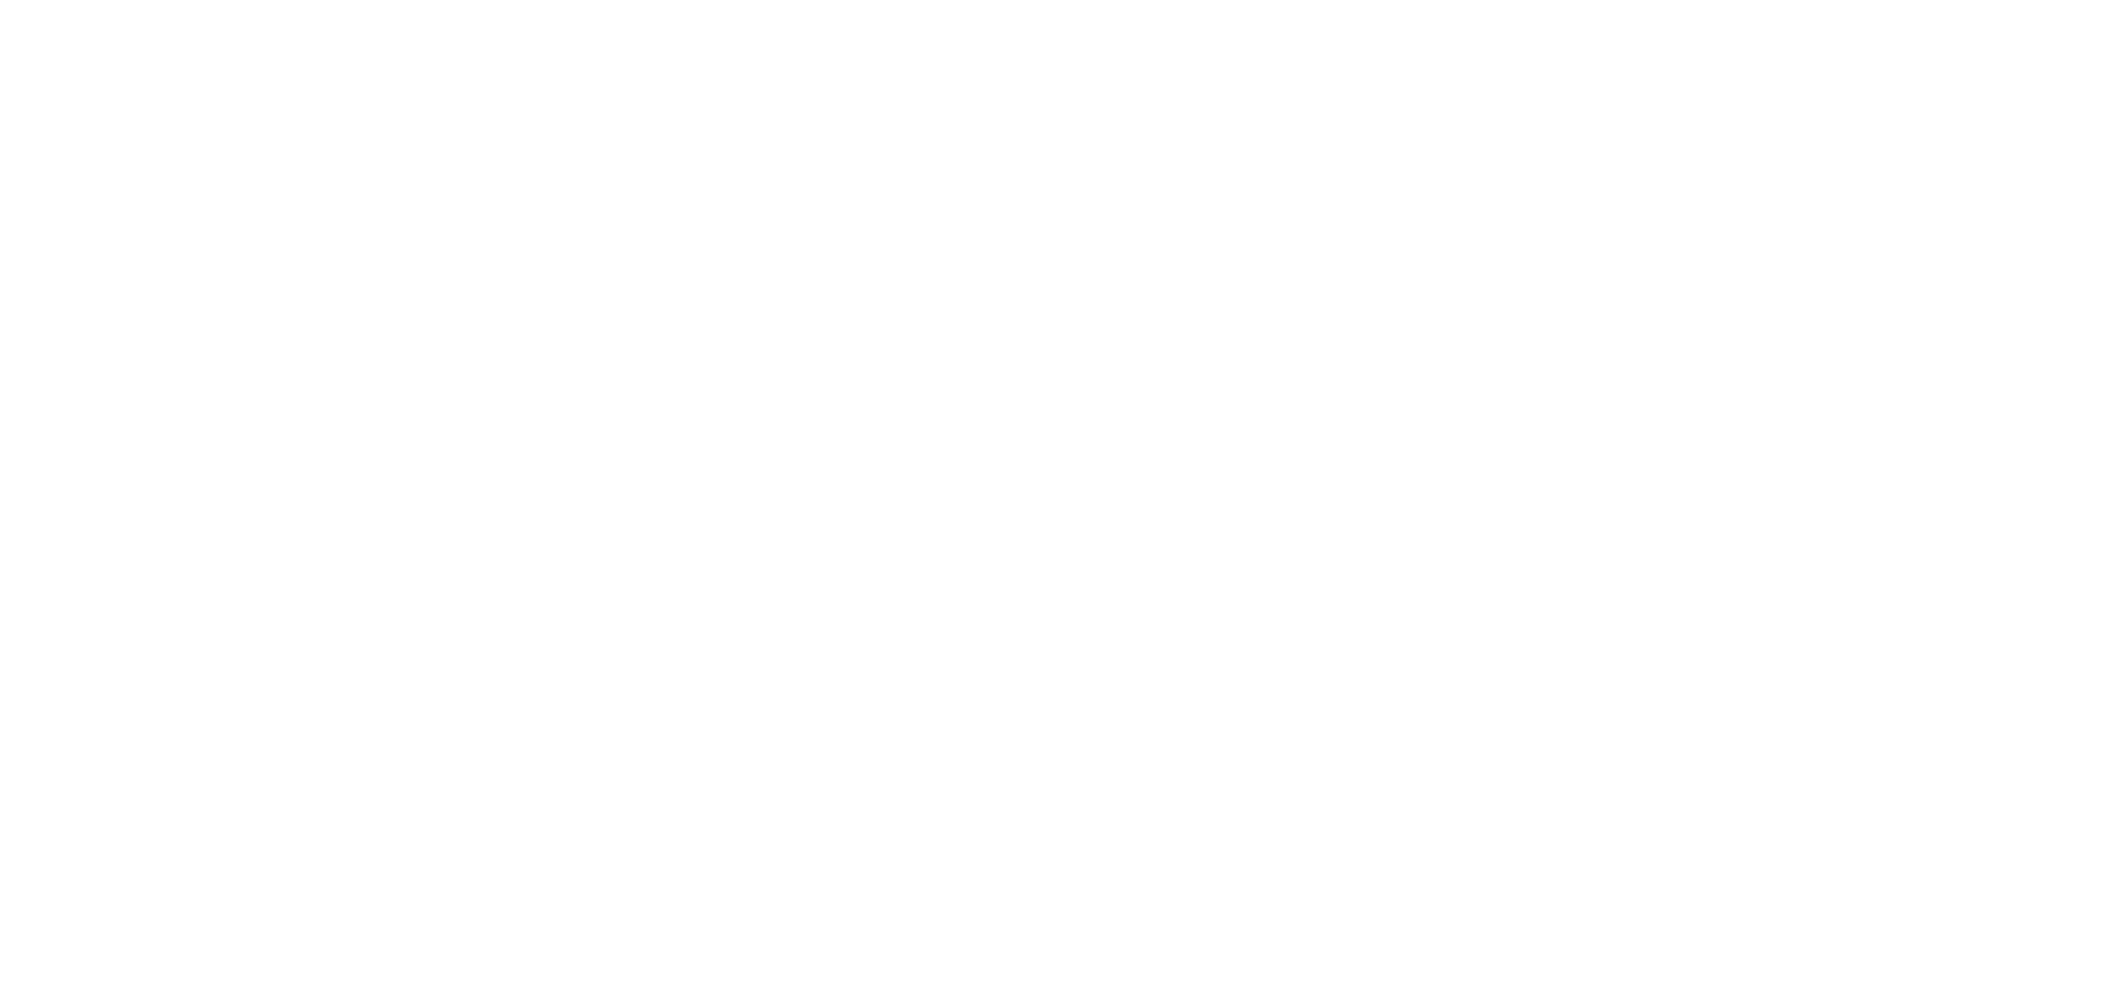 Pirate Penguins Video